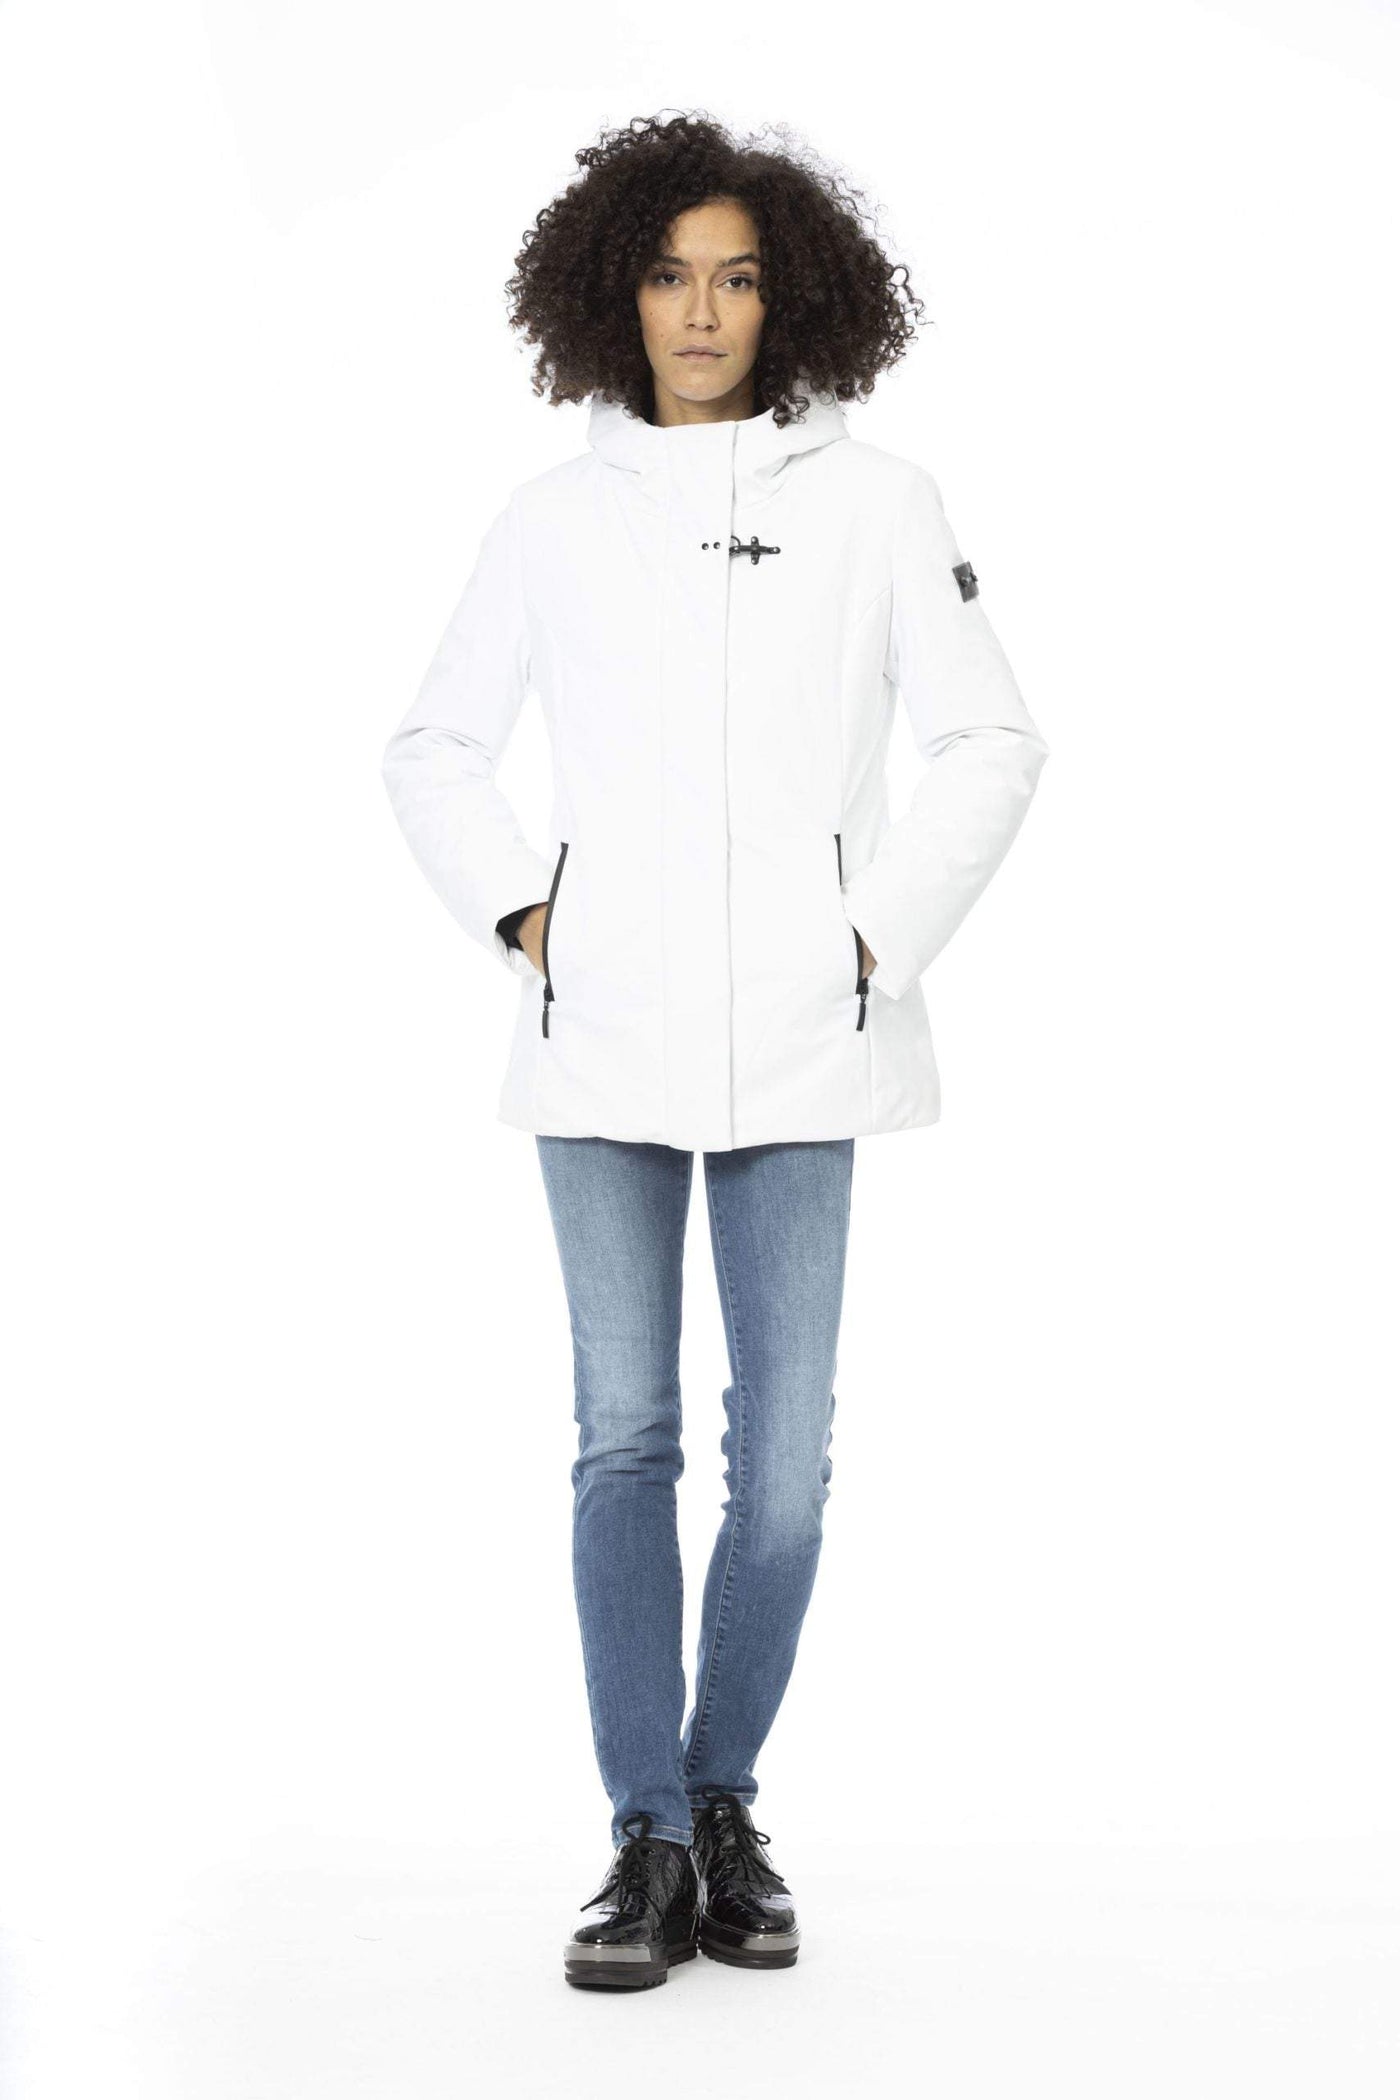 Baldinini Trend White Polyester Jackets & Coat Baldinini Trend, feed-1, Jackets & Coats - Women - Clothing, L, M, White, XL, XXL at SEYMAYKA